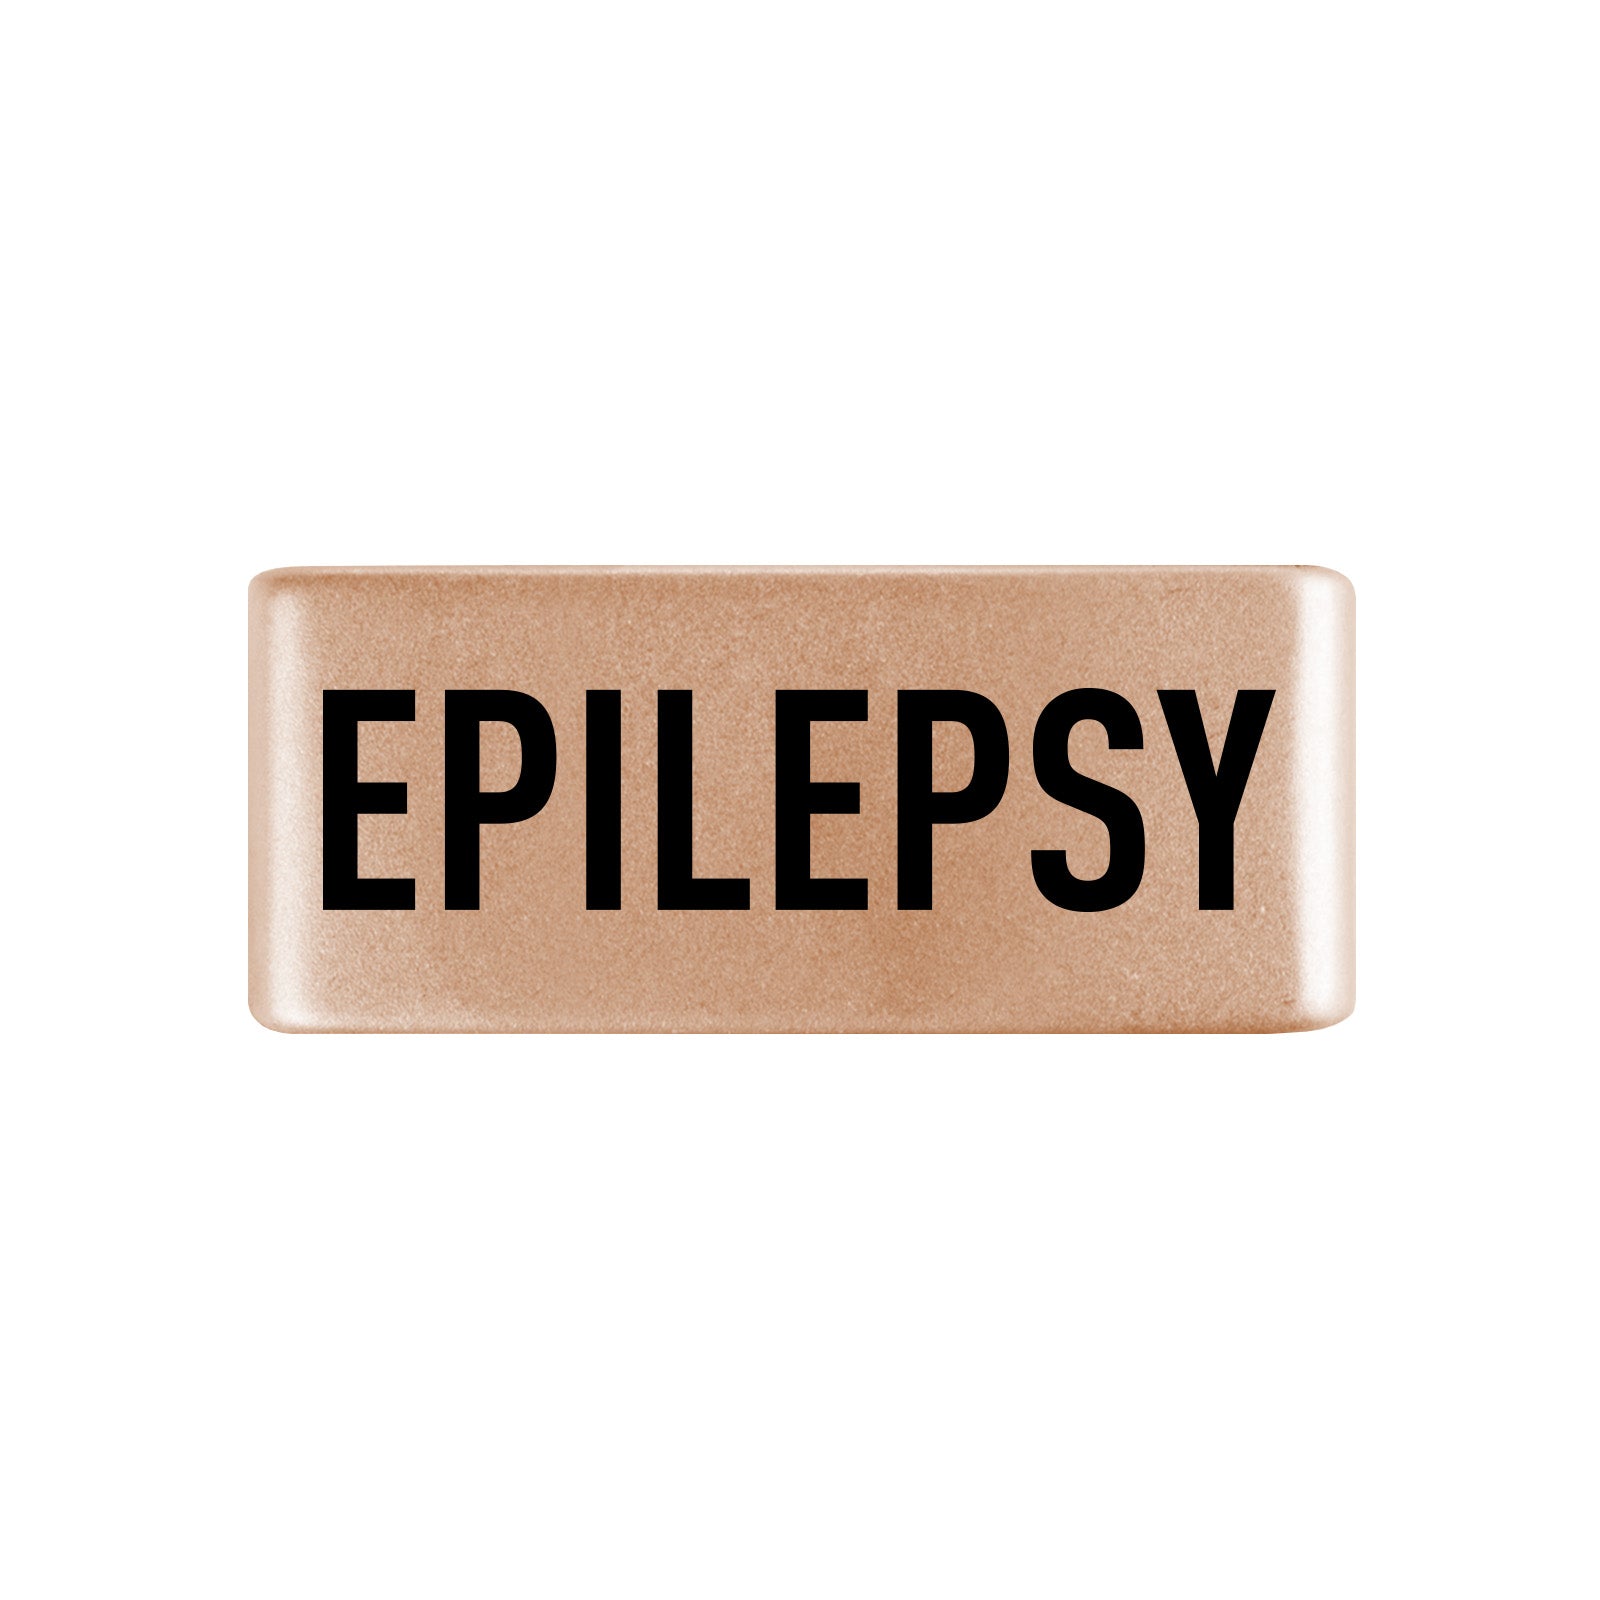 Epilepsy Badge Badge 13mm - ROAD iD